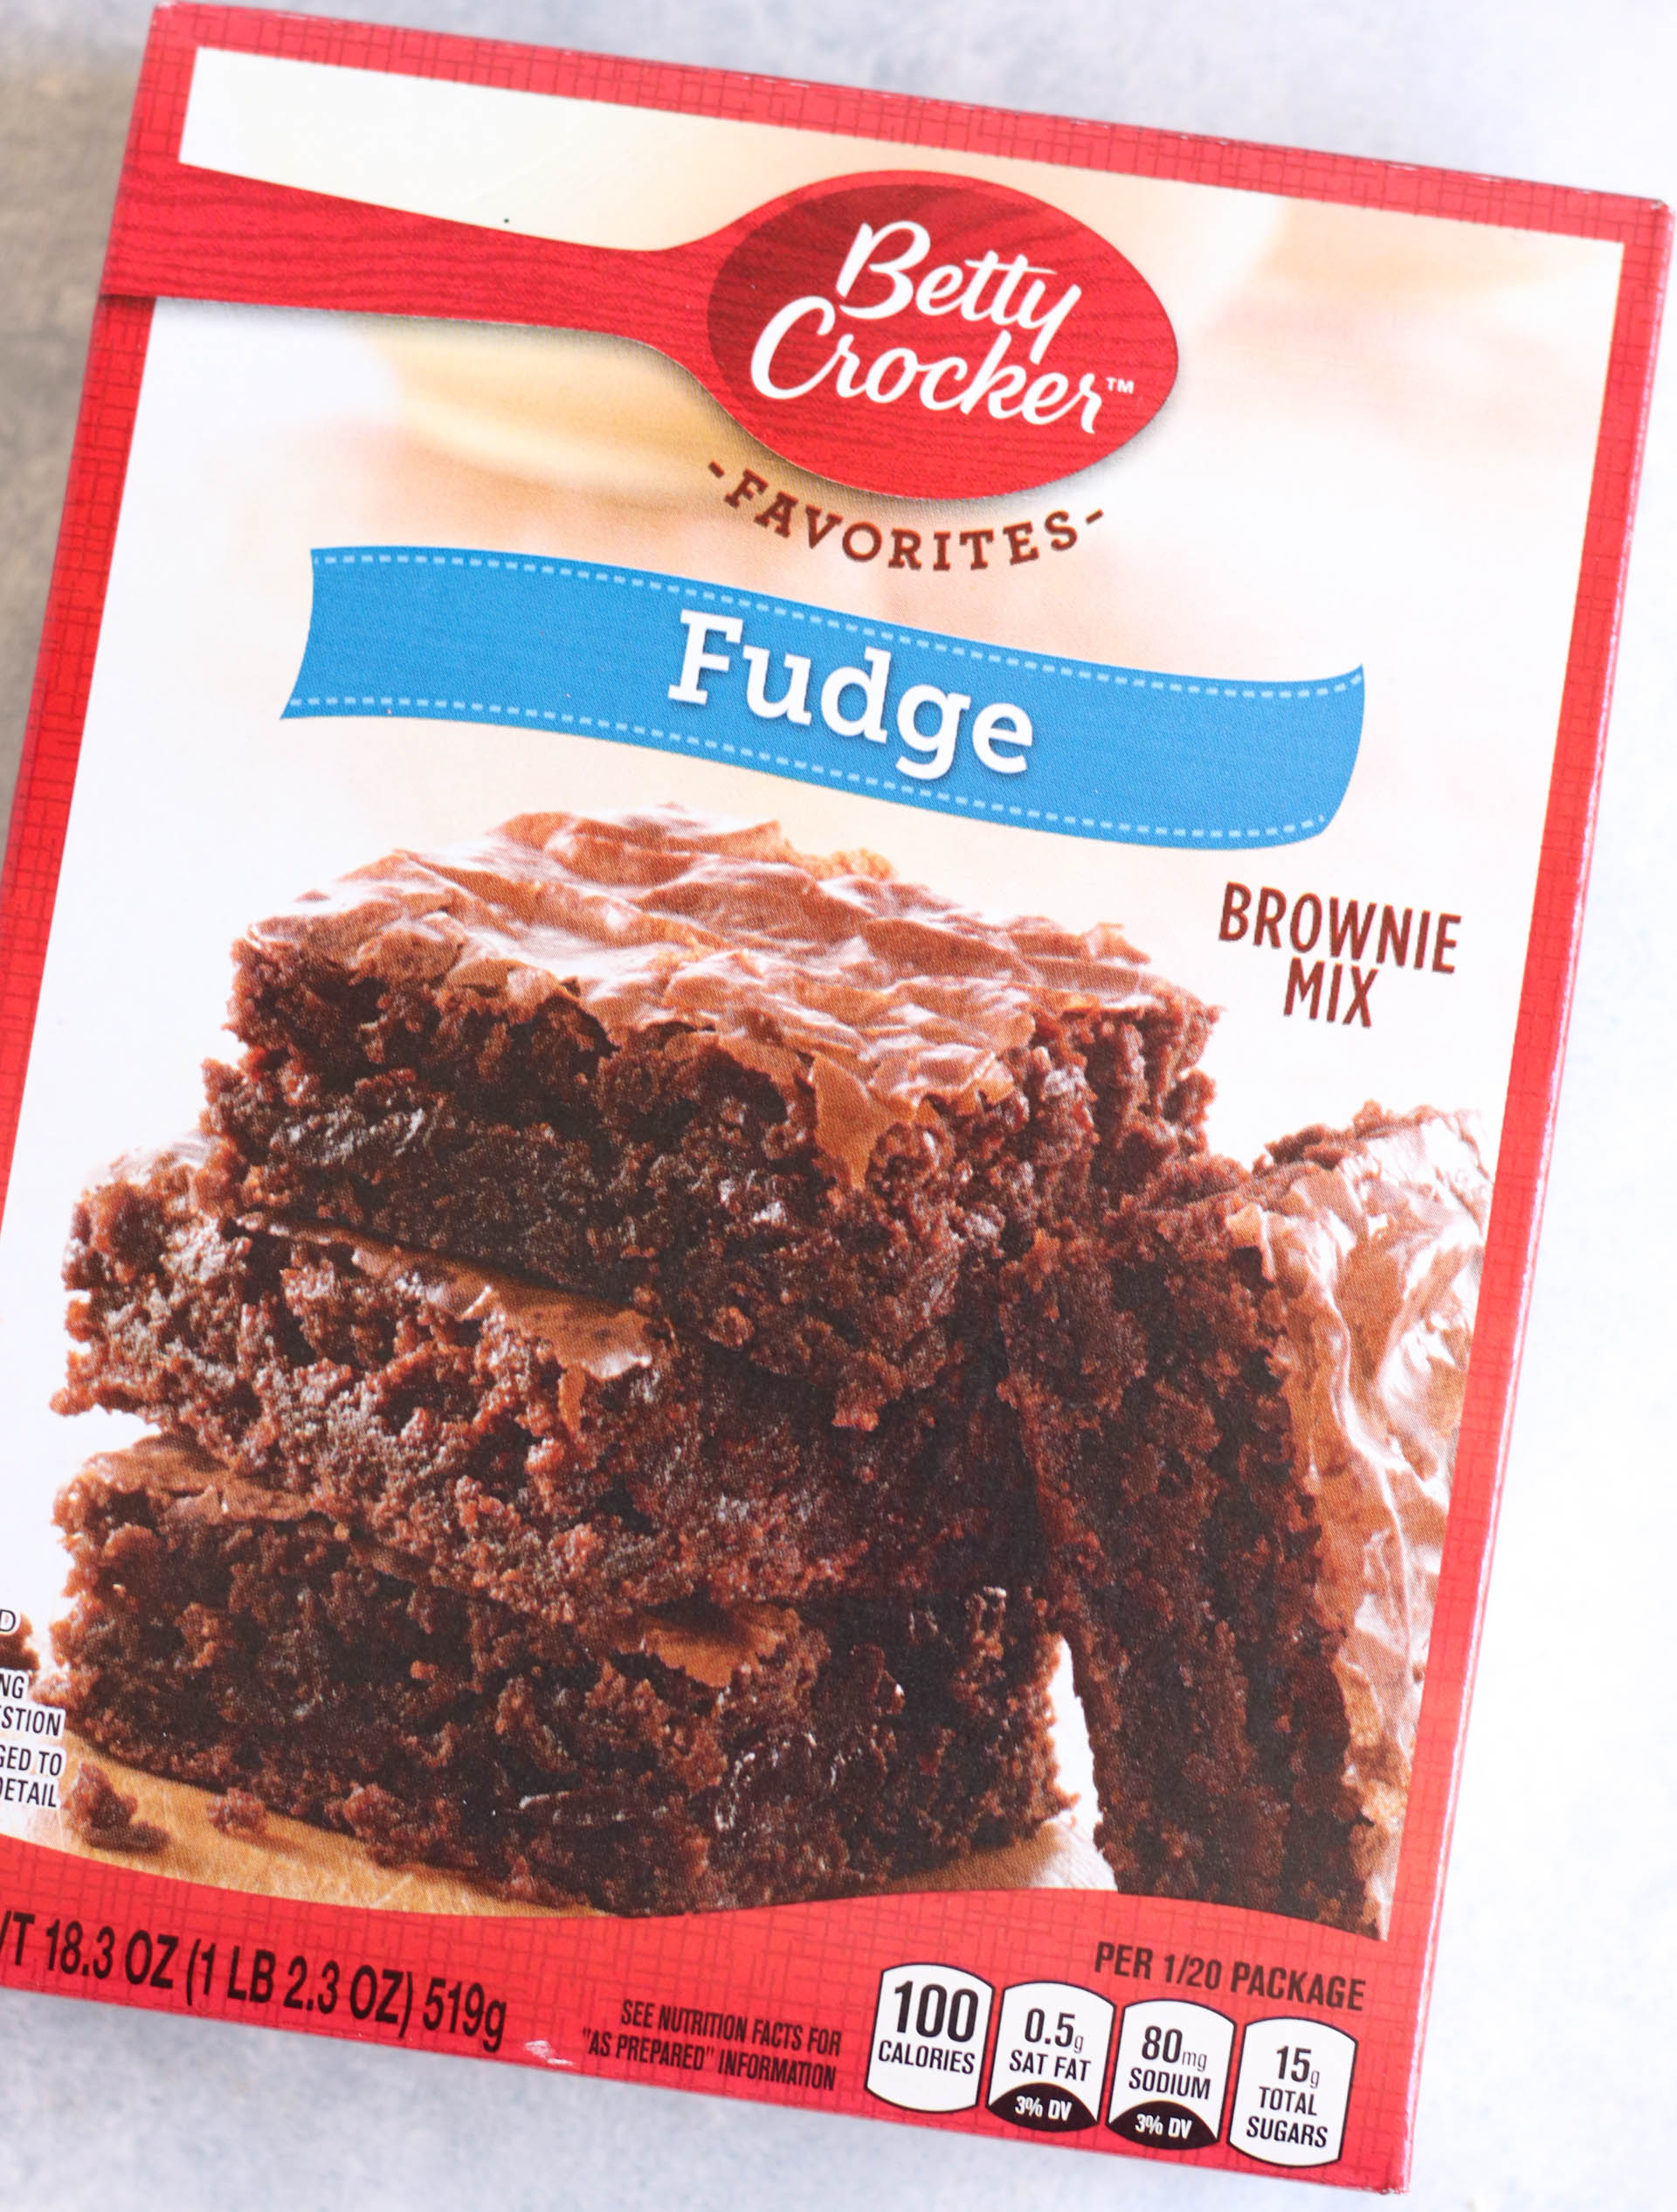 A box of Fudge Brownie Mix